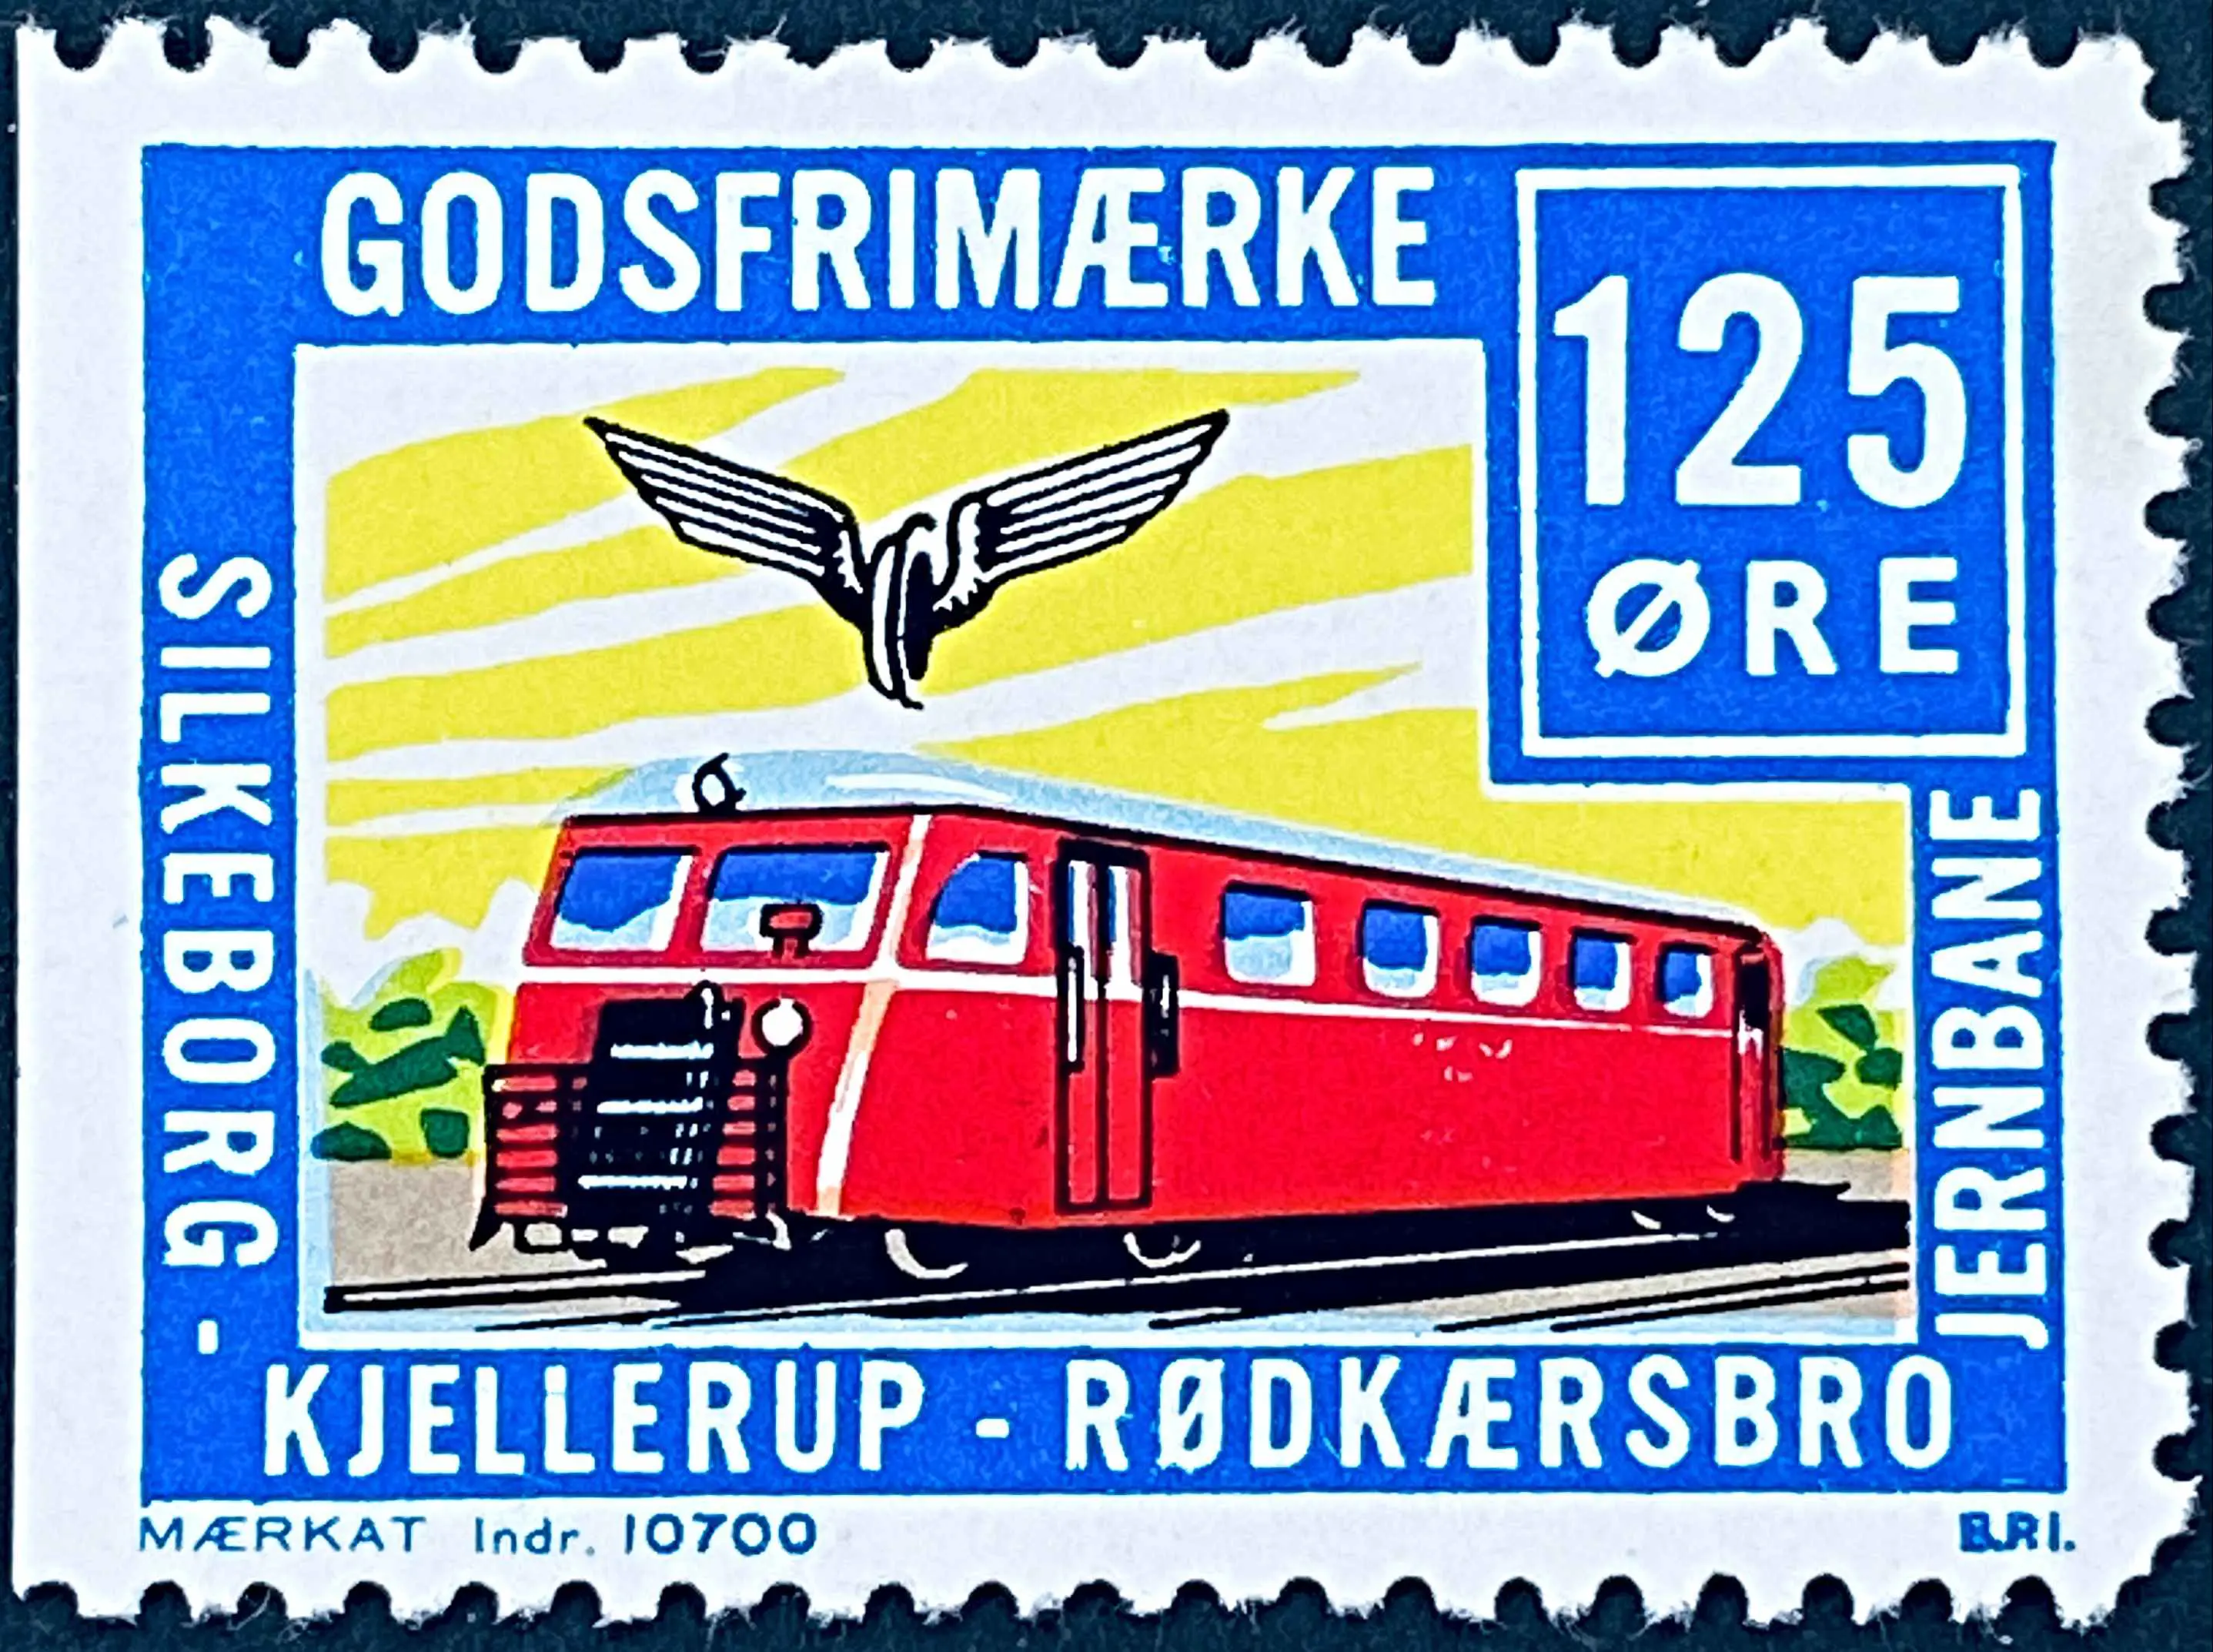 SKRJ 46 - 125 Øre Motiv: Skinnebus - Blå, Gul, Rød og sort - trykkeri: Beckers Papirindustri A/S med mærke nummer: 10700.